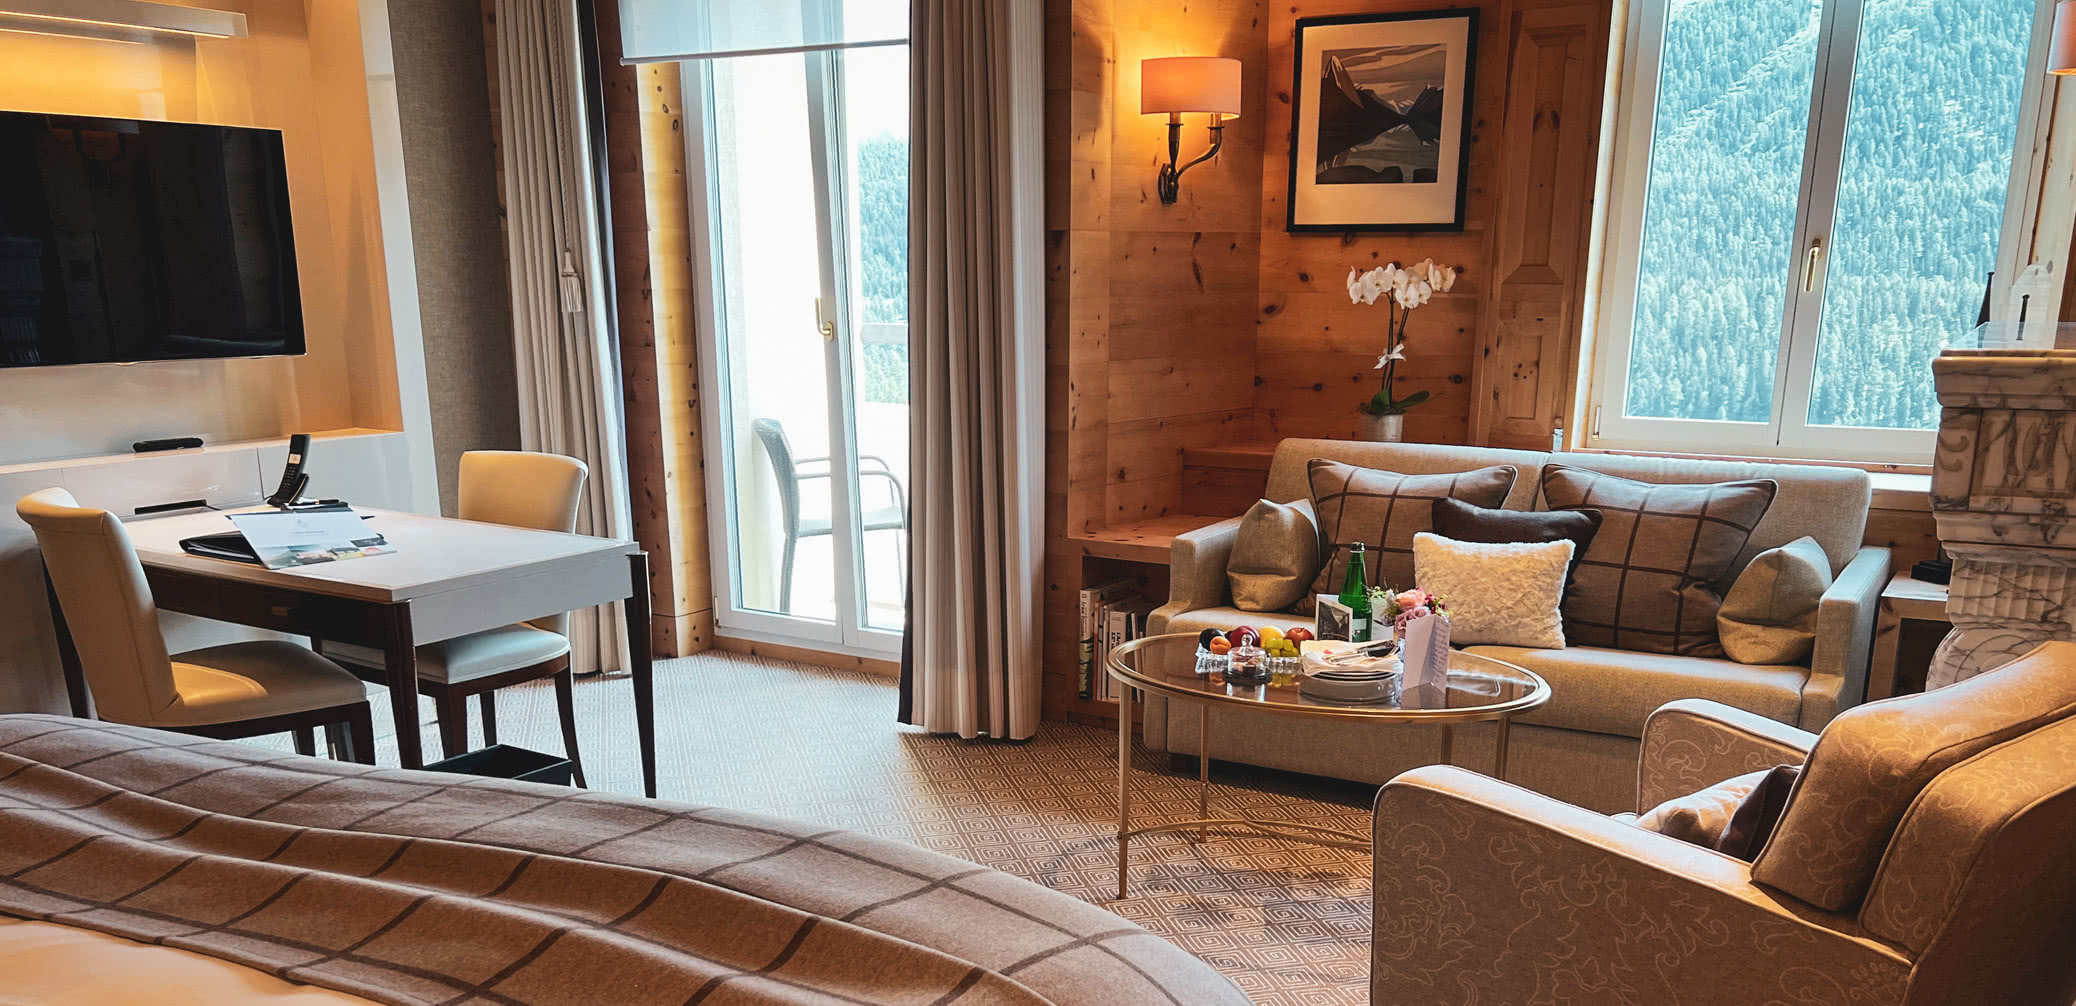 Review: Kulm Hotel St. Moritz